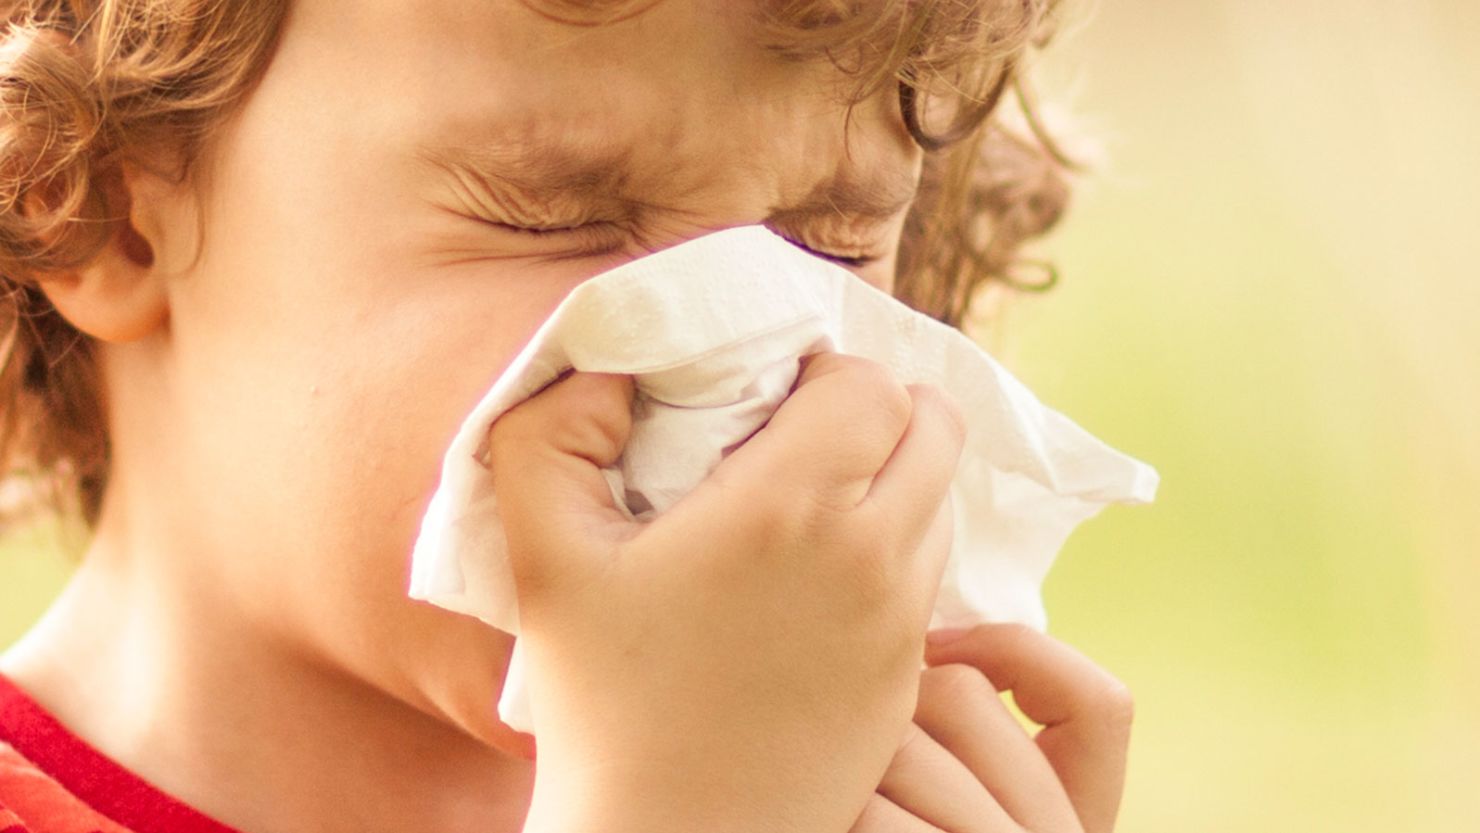 Boy sneezes due to allergies